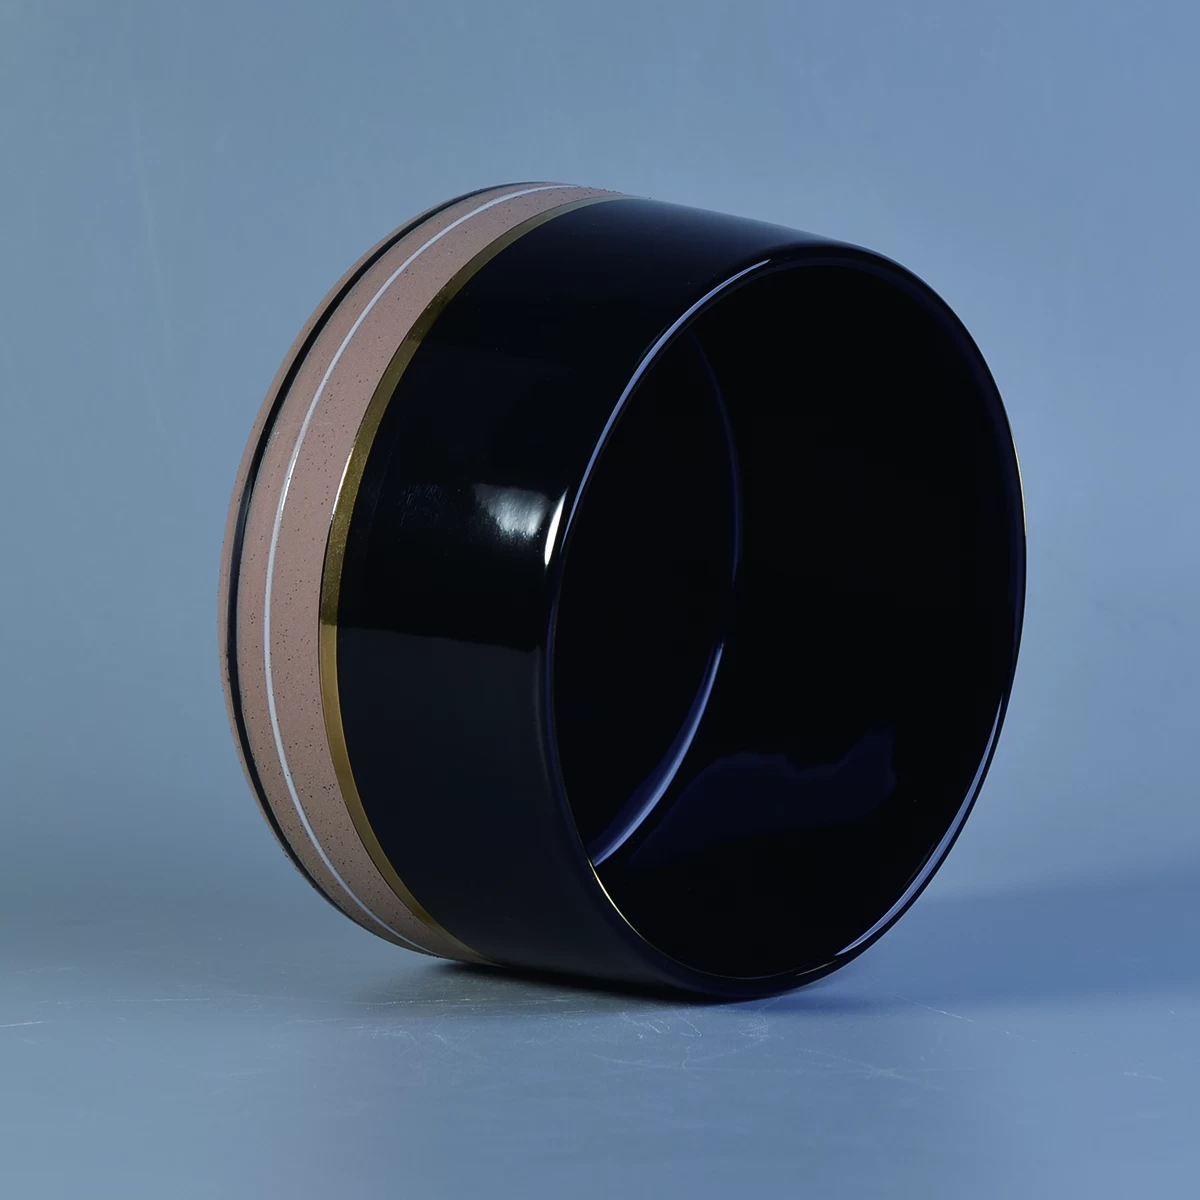 Sunny custom empty black large ceramic candle container vessel